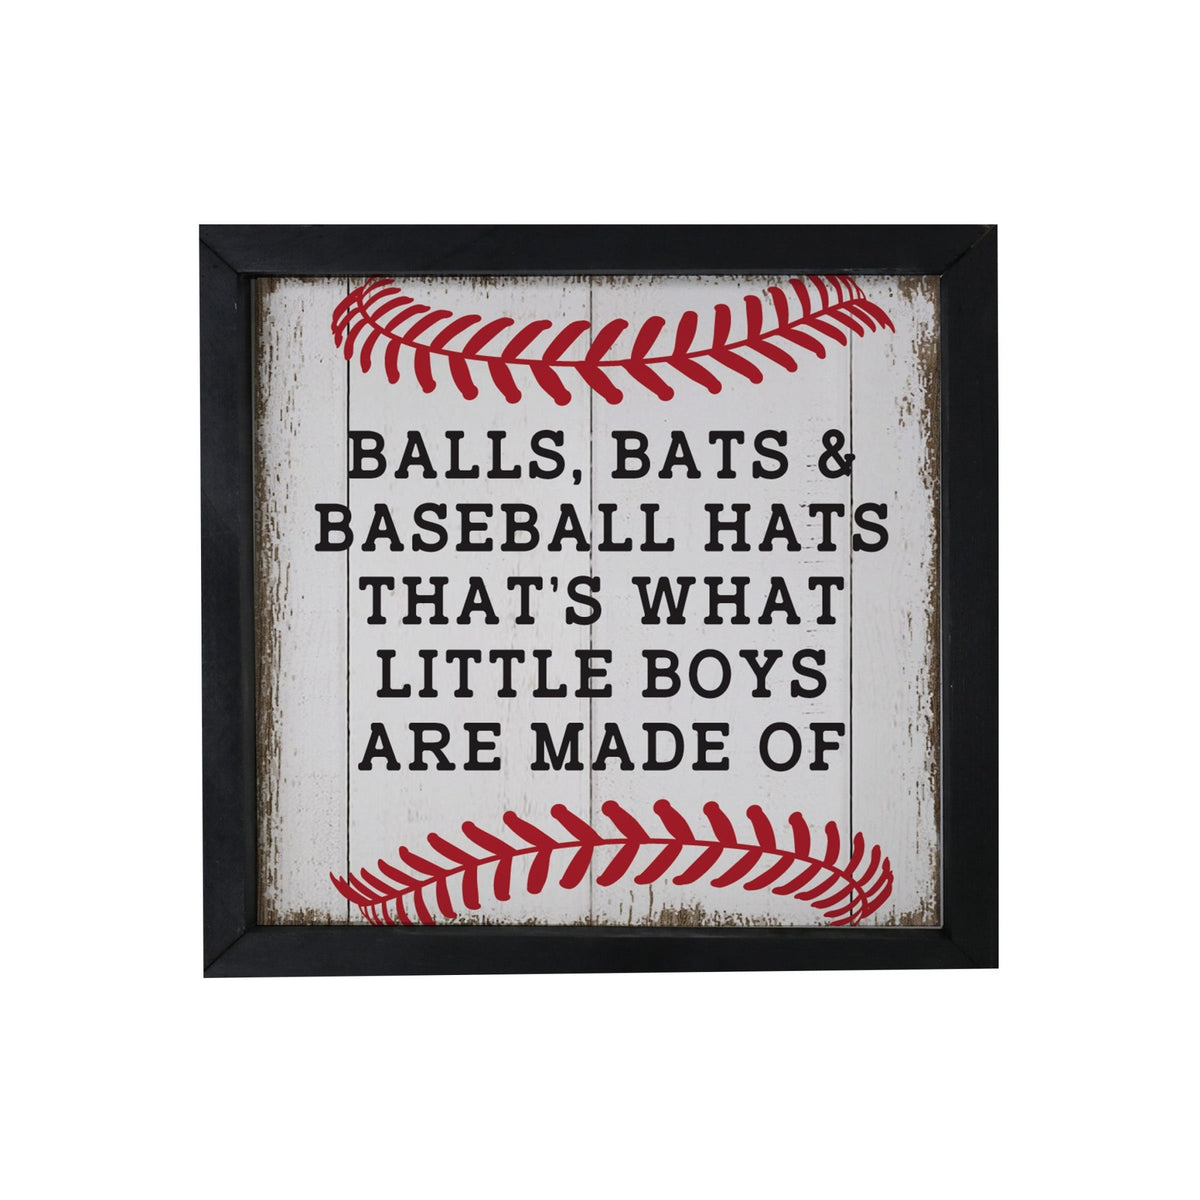 Elegant Baseball Framed Shadow Box Shelf Décor With Inspiring Bible Verses - Balls, Bats, &amp; Baseball Hats - LifeSong Milestones